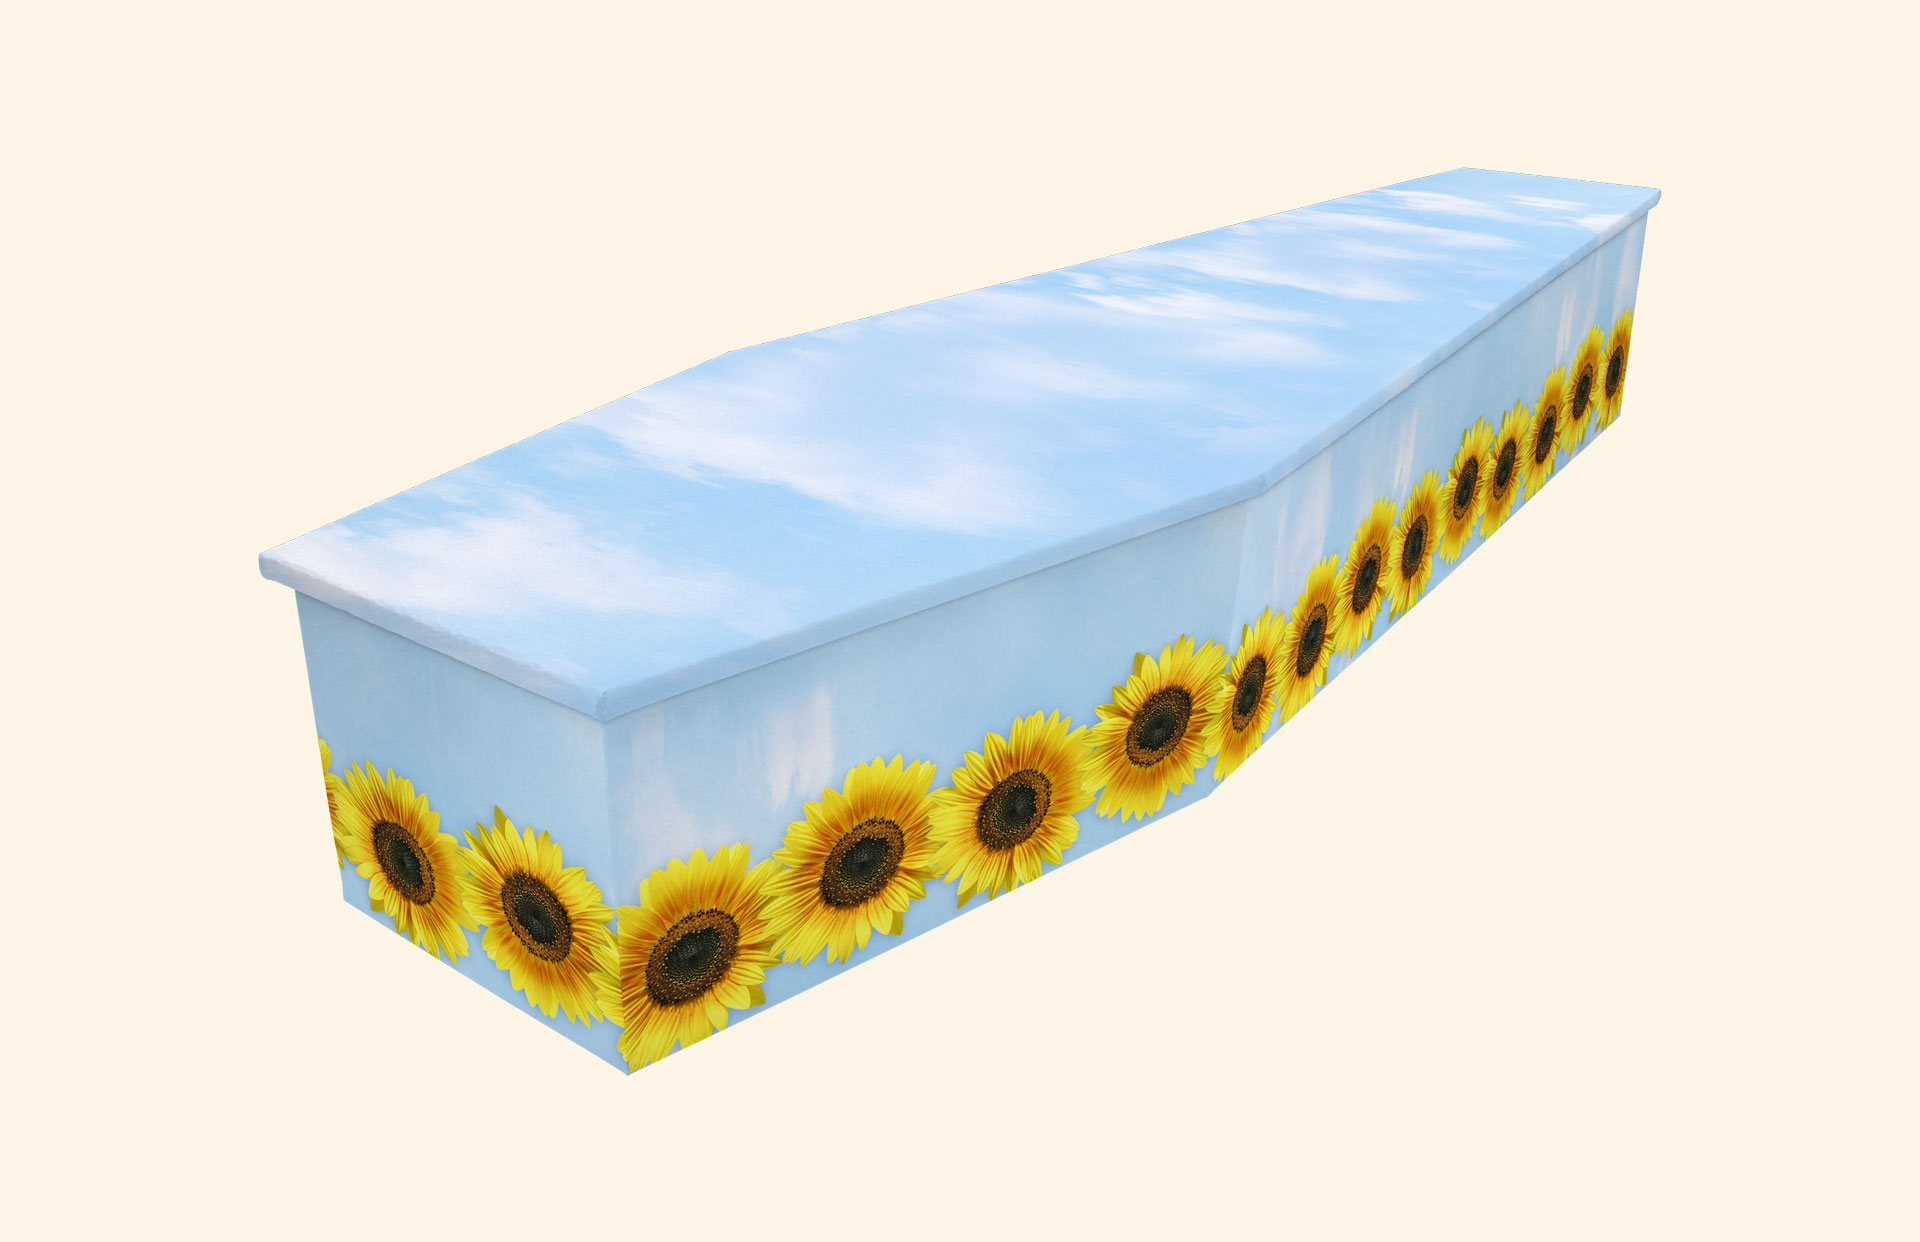 Sunflower Sky design on a cardboard coffin